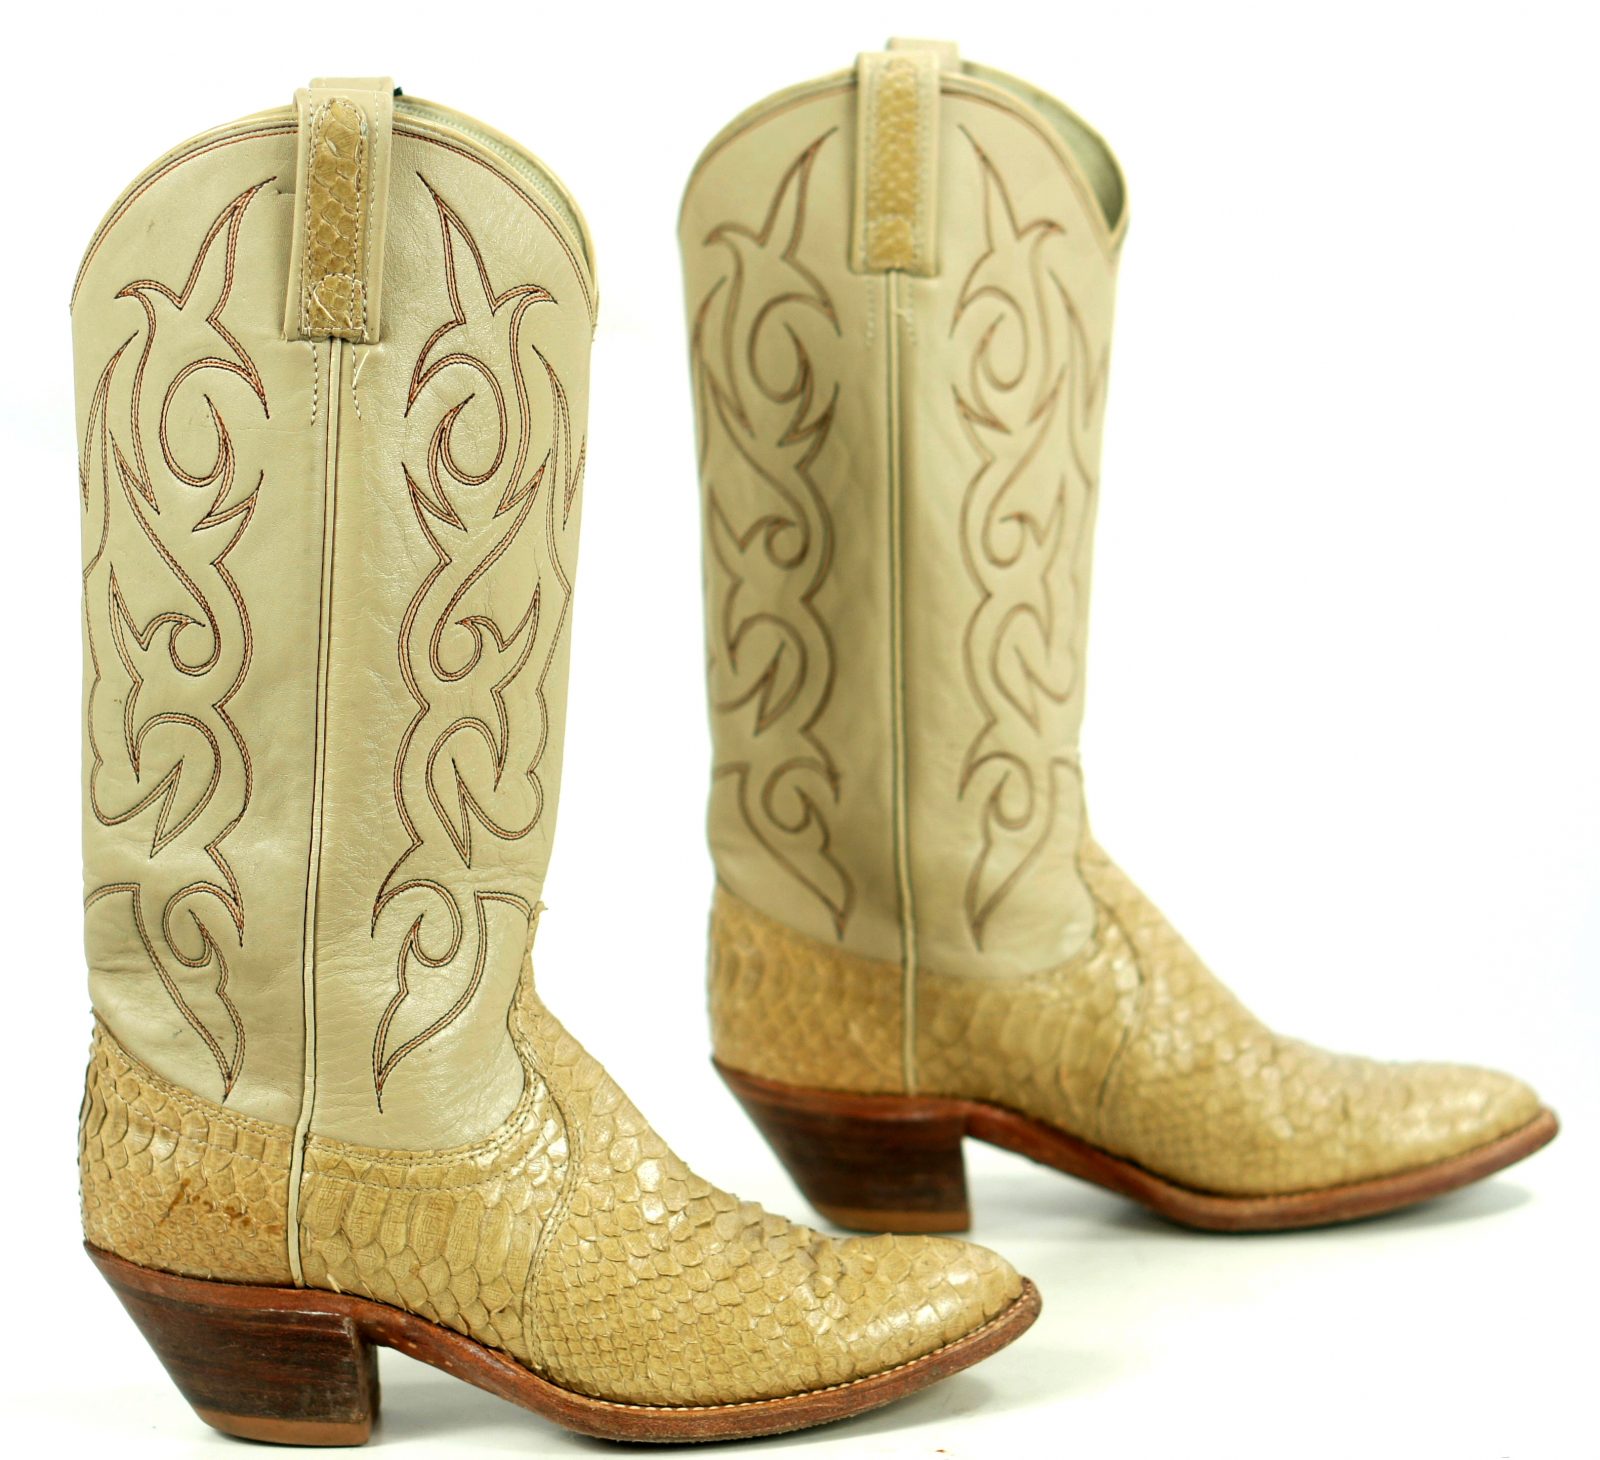 Dan Post Snakeskin Cowboy Western Boots Tan Bone Vintage US Made Women